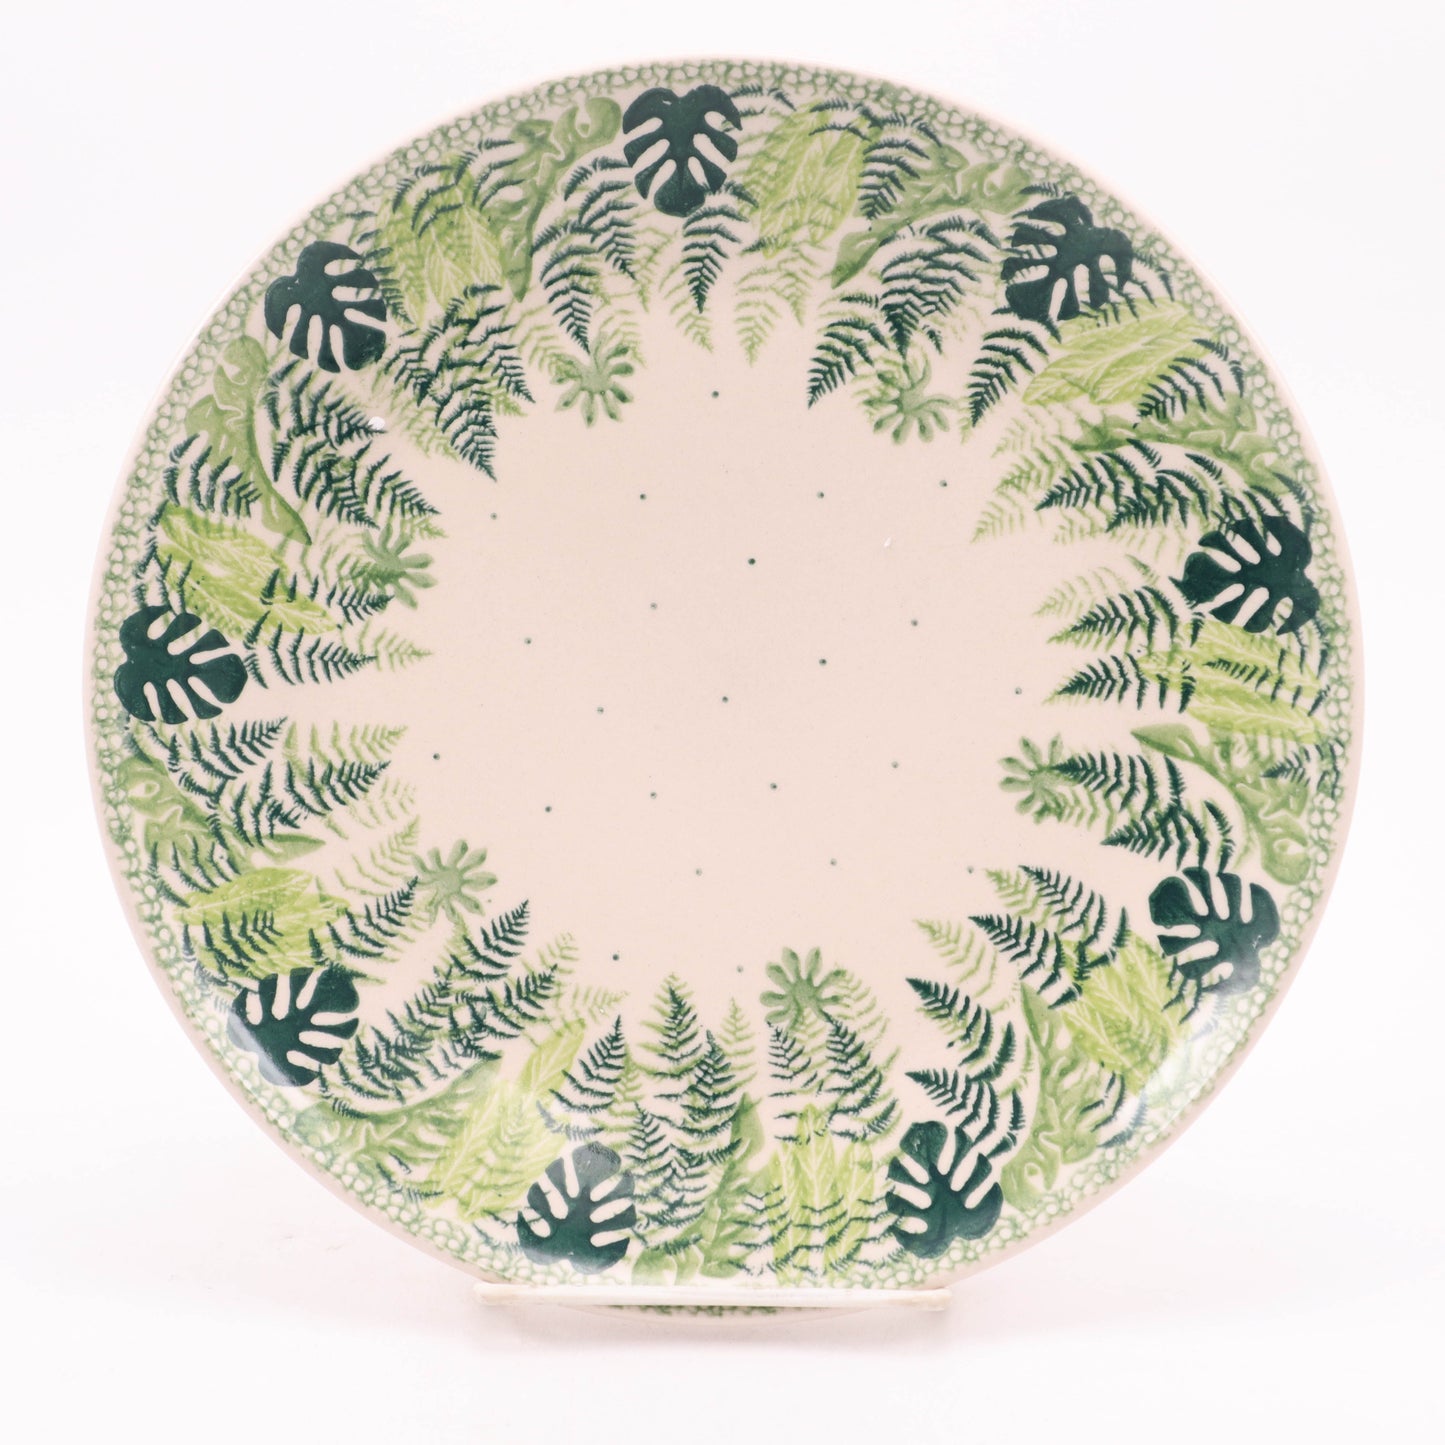 9.5" Dinner Plate. Pattern: Forest Ferns